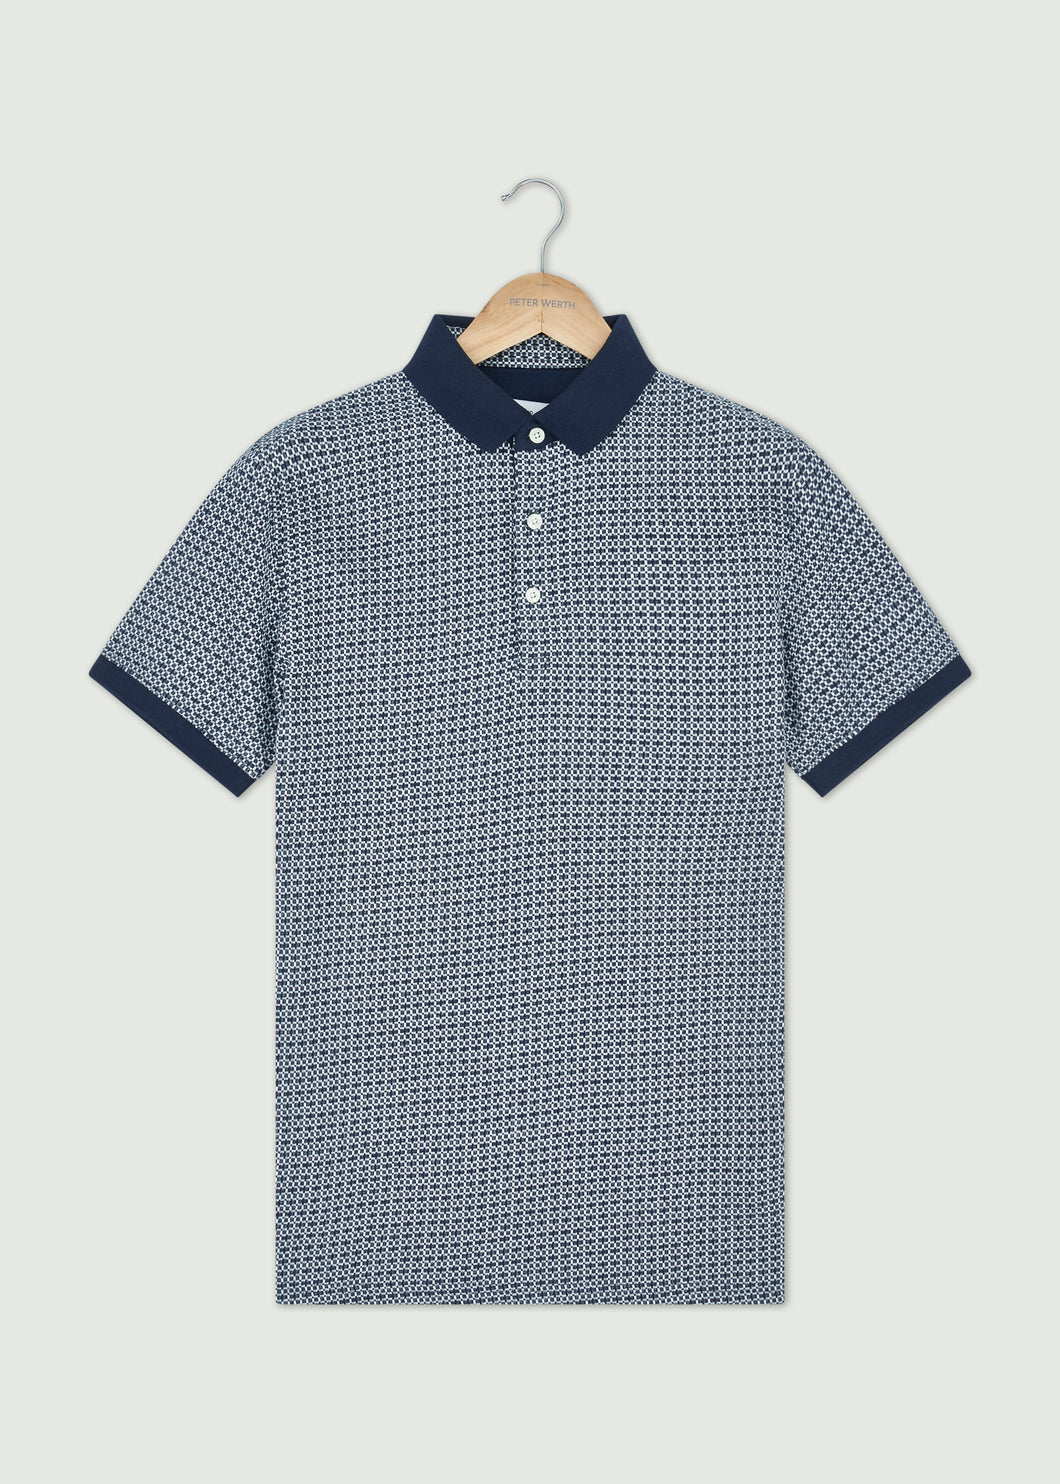 Balderton Polo Shirt - Navy/White